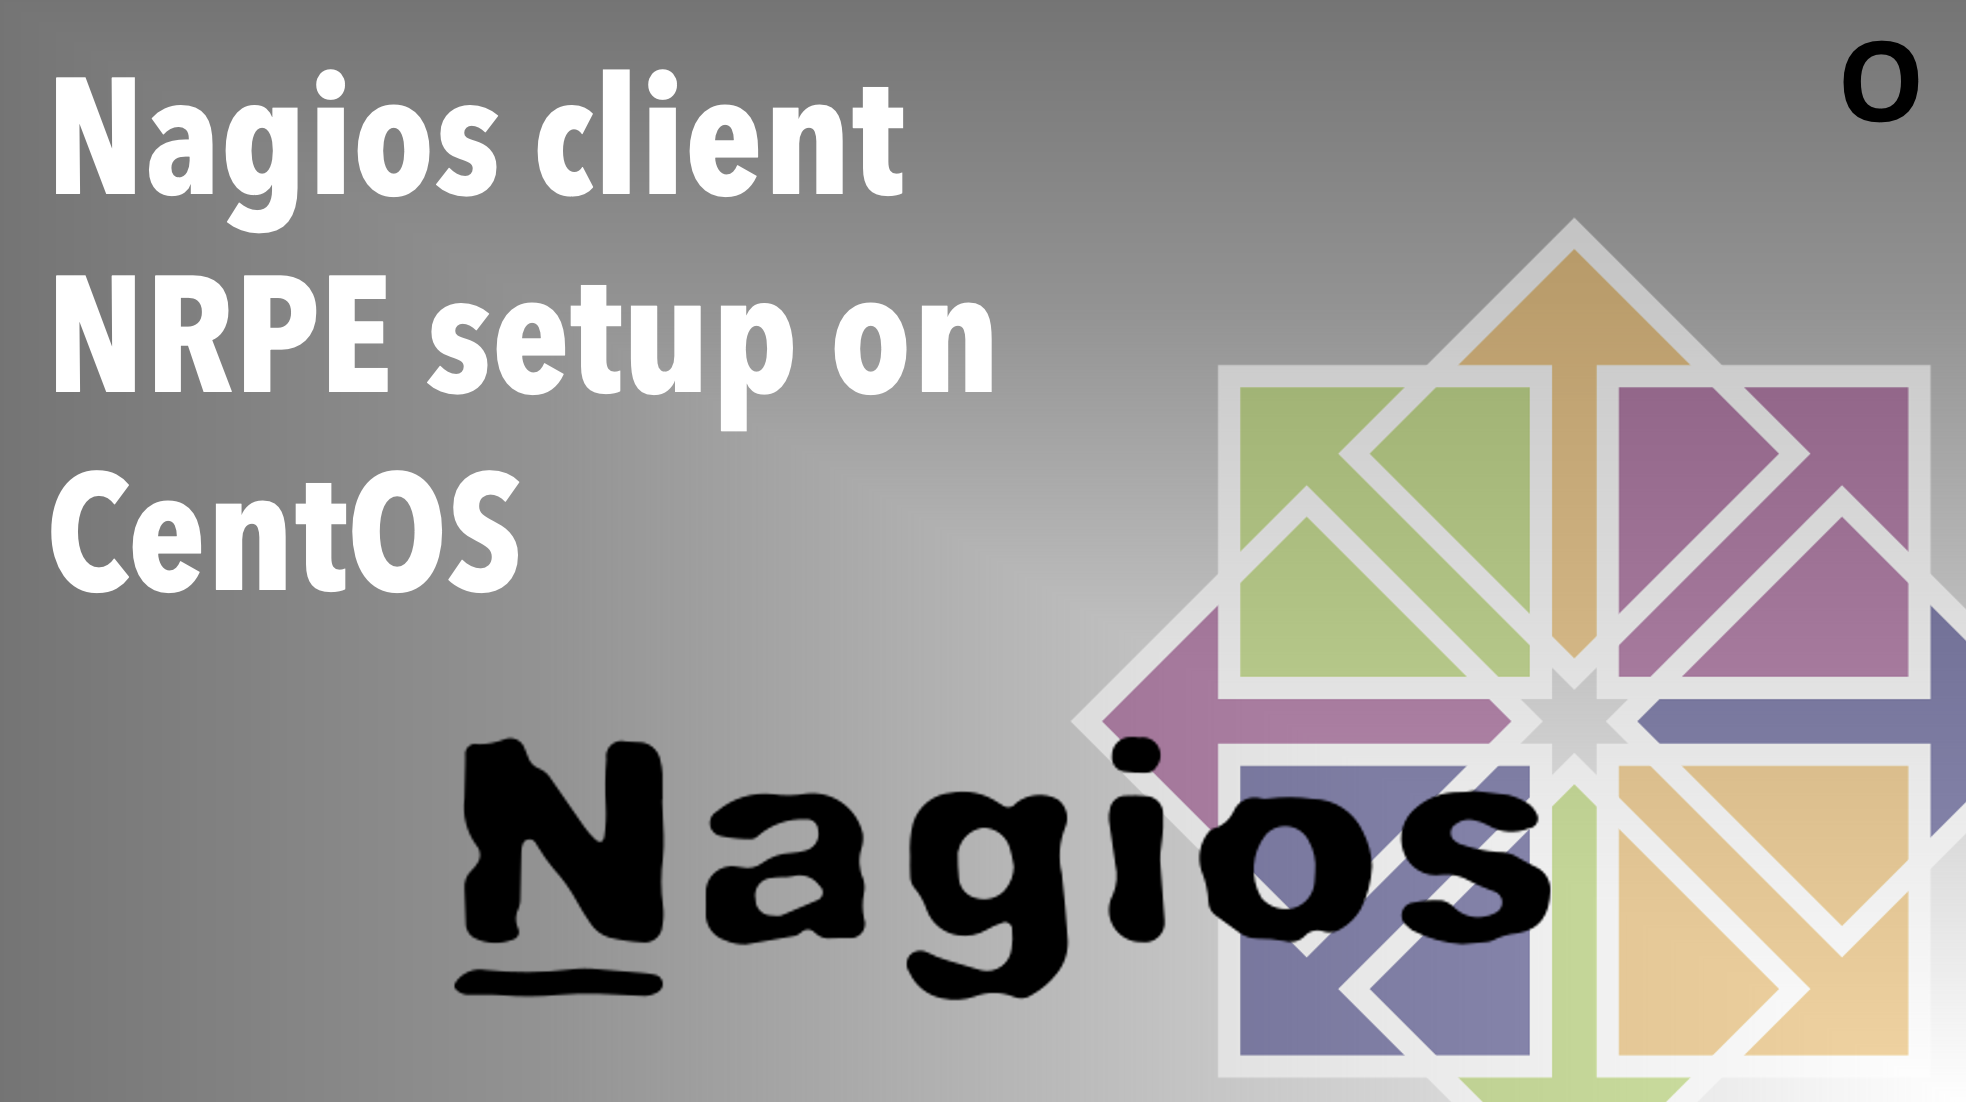 How to install Nagios client (NRPE) on CentOS